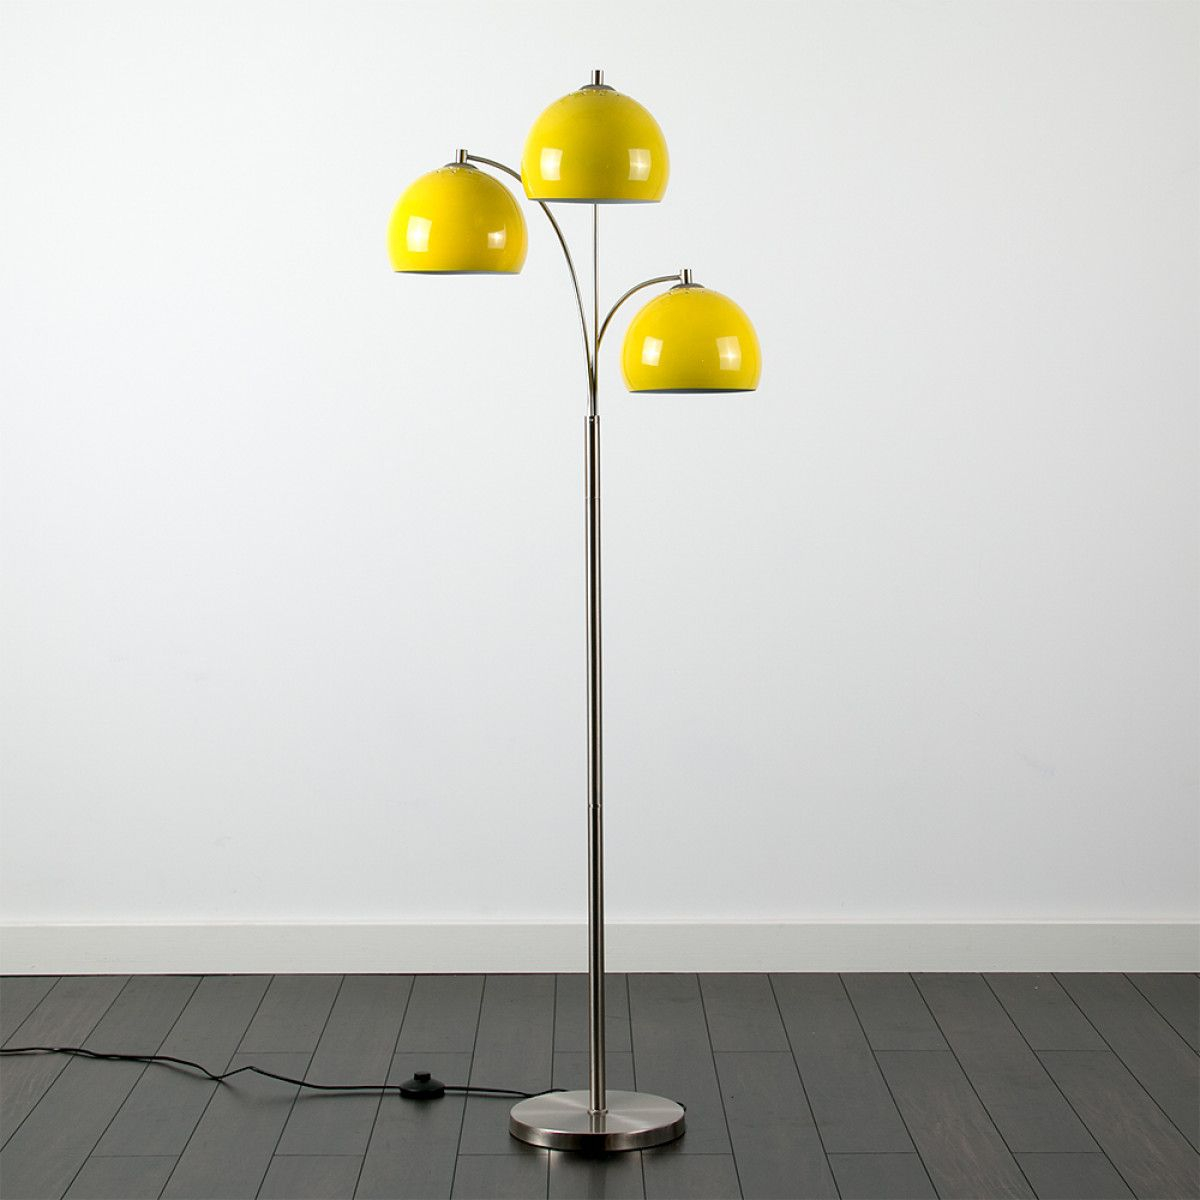 Dantzig Satin Nickel 3 Arm Floor Lamp With Yellow Dome regarding size 1200 X 1200